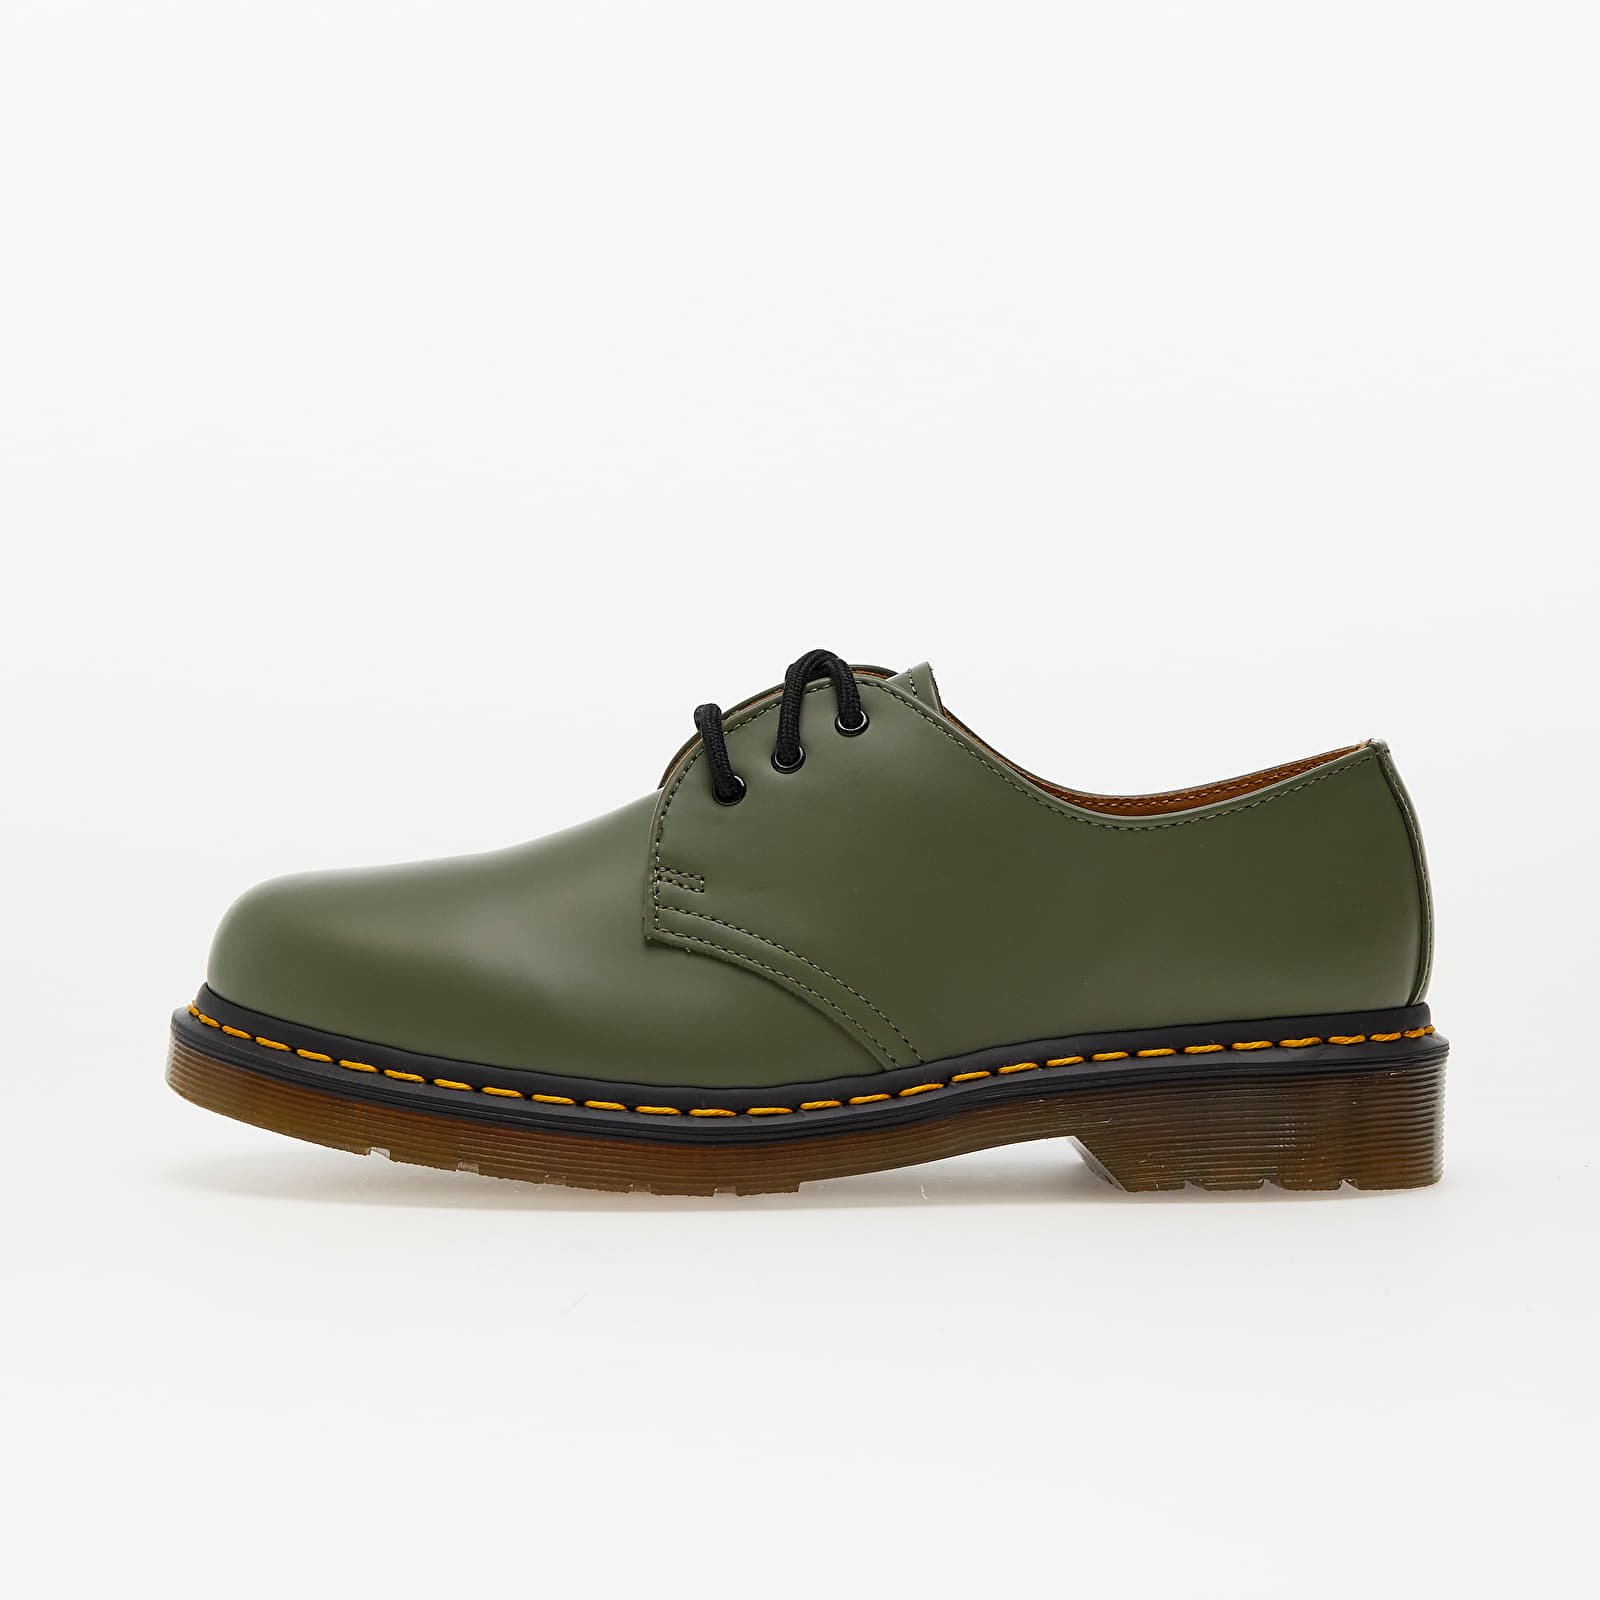 Men's sneakers and shoes Dr. Martens 1461 3 Eye Shoe Khaki Green